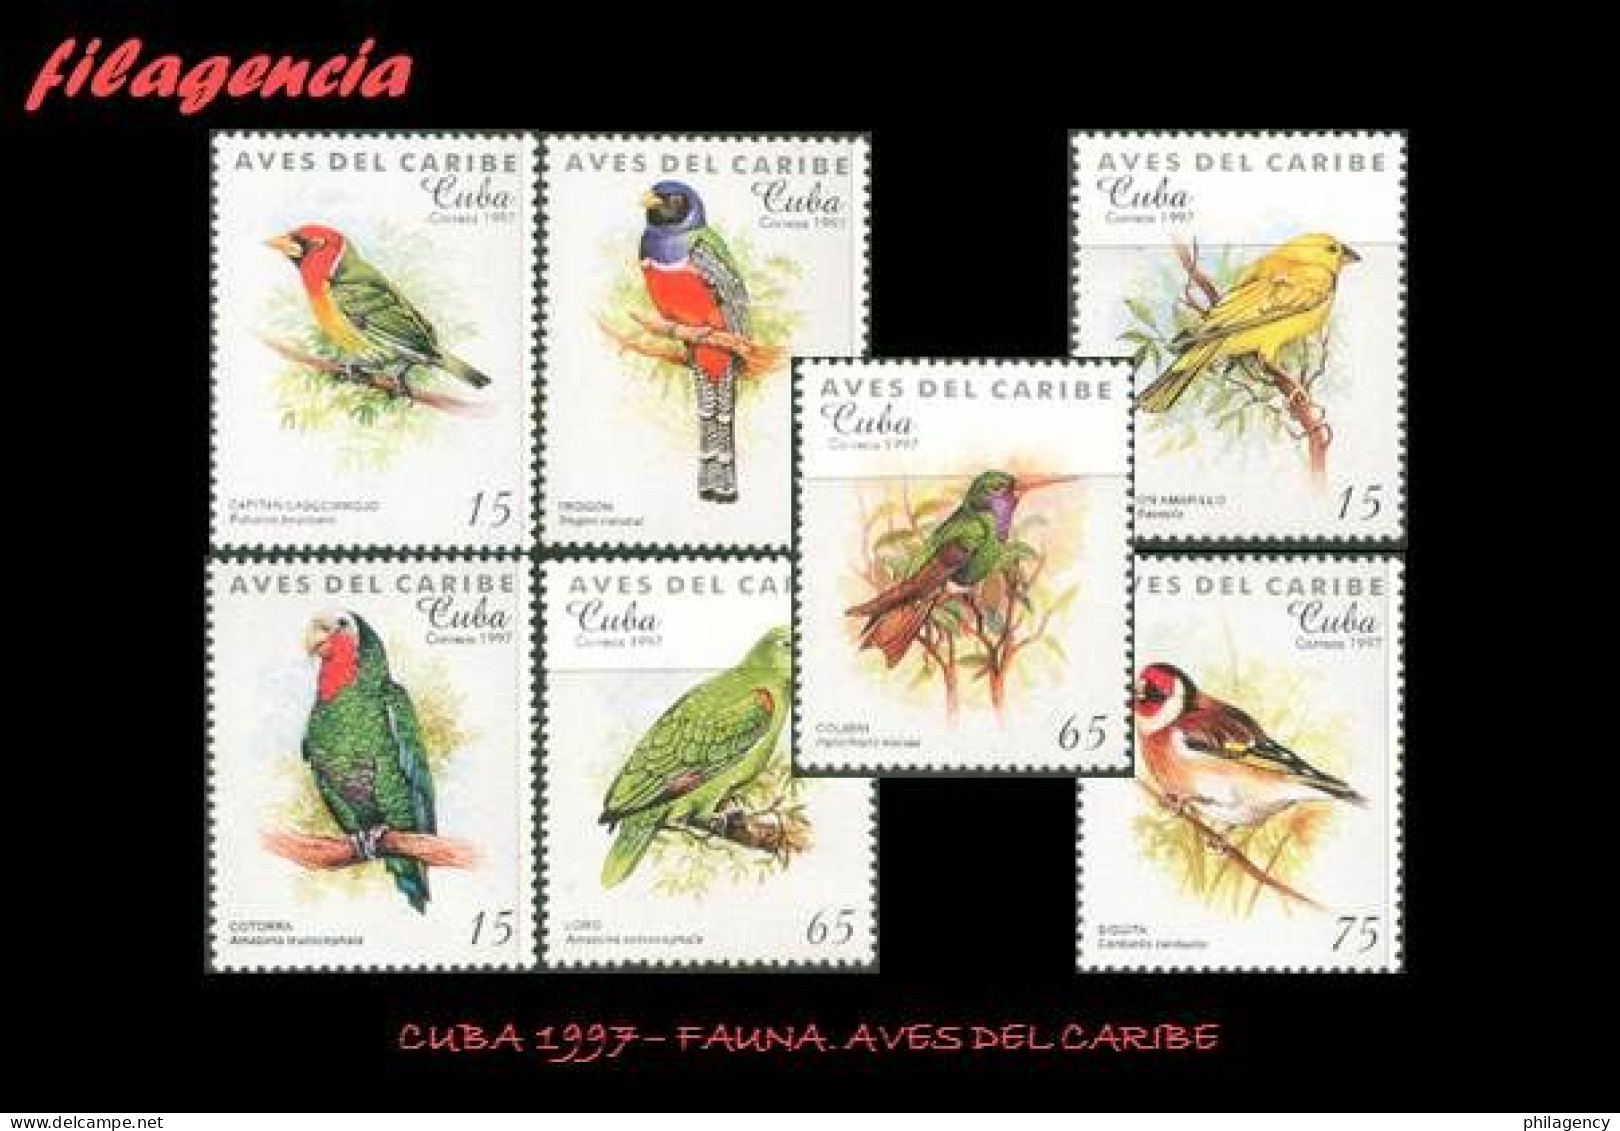 CUBA MINT. 1997-18 FAUNA. AVES DEL CARIBE - Unused Stamps